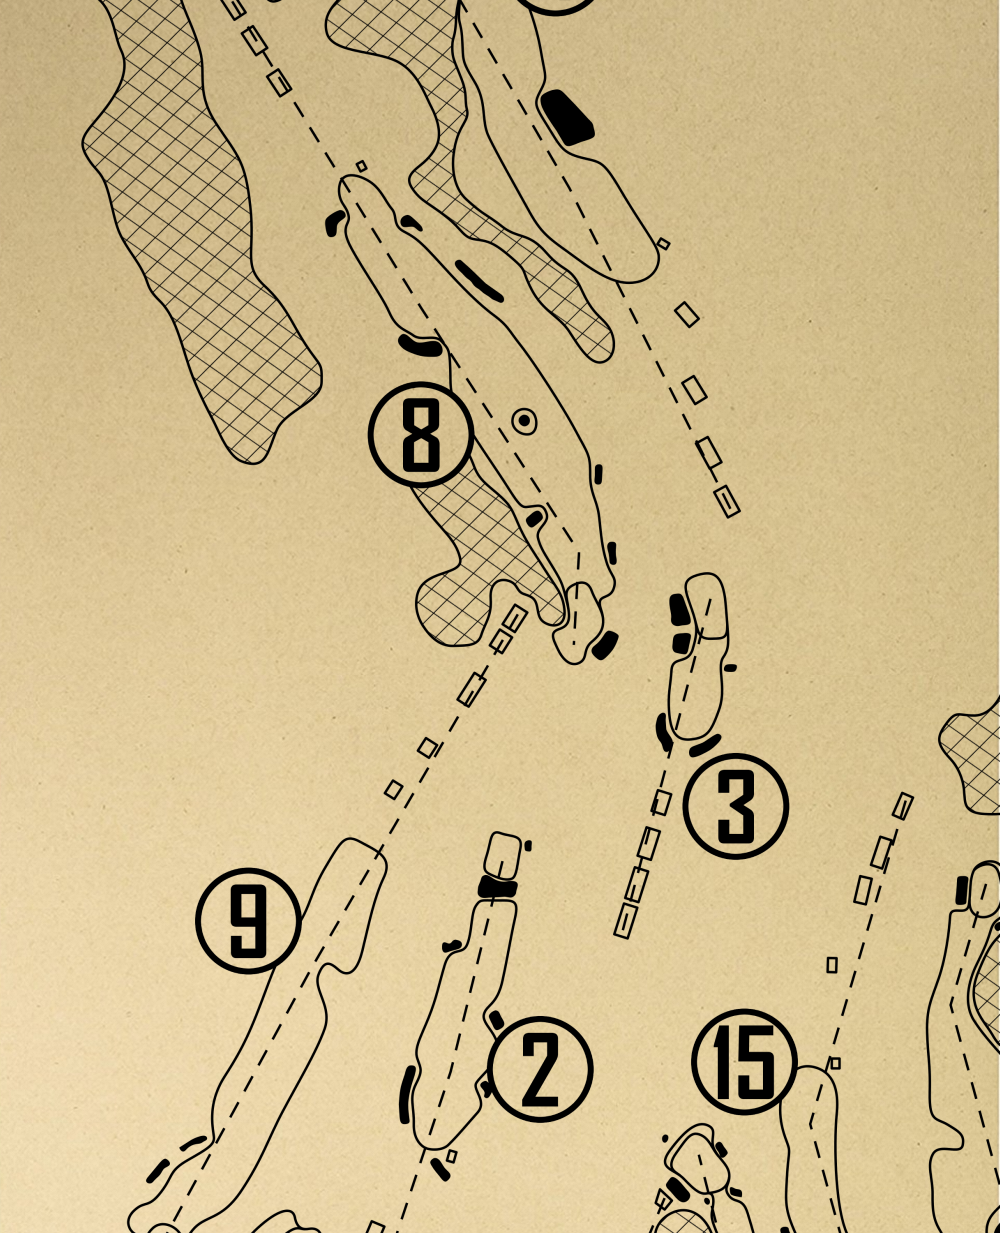 Plantation at Sea Island Golf Club Outline (Print)